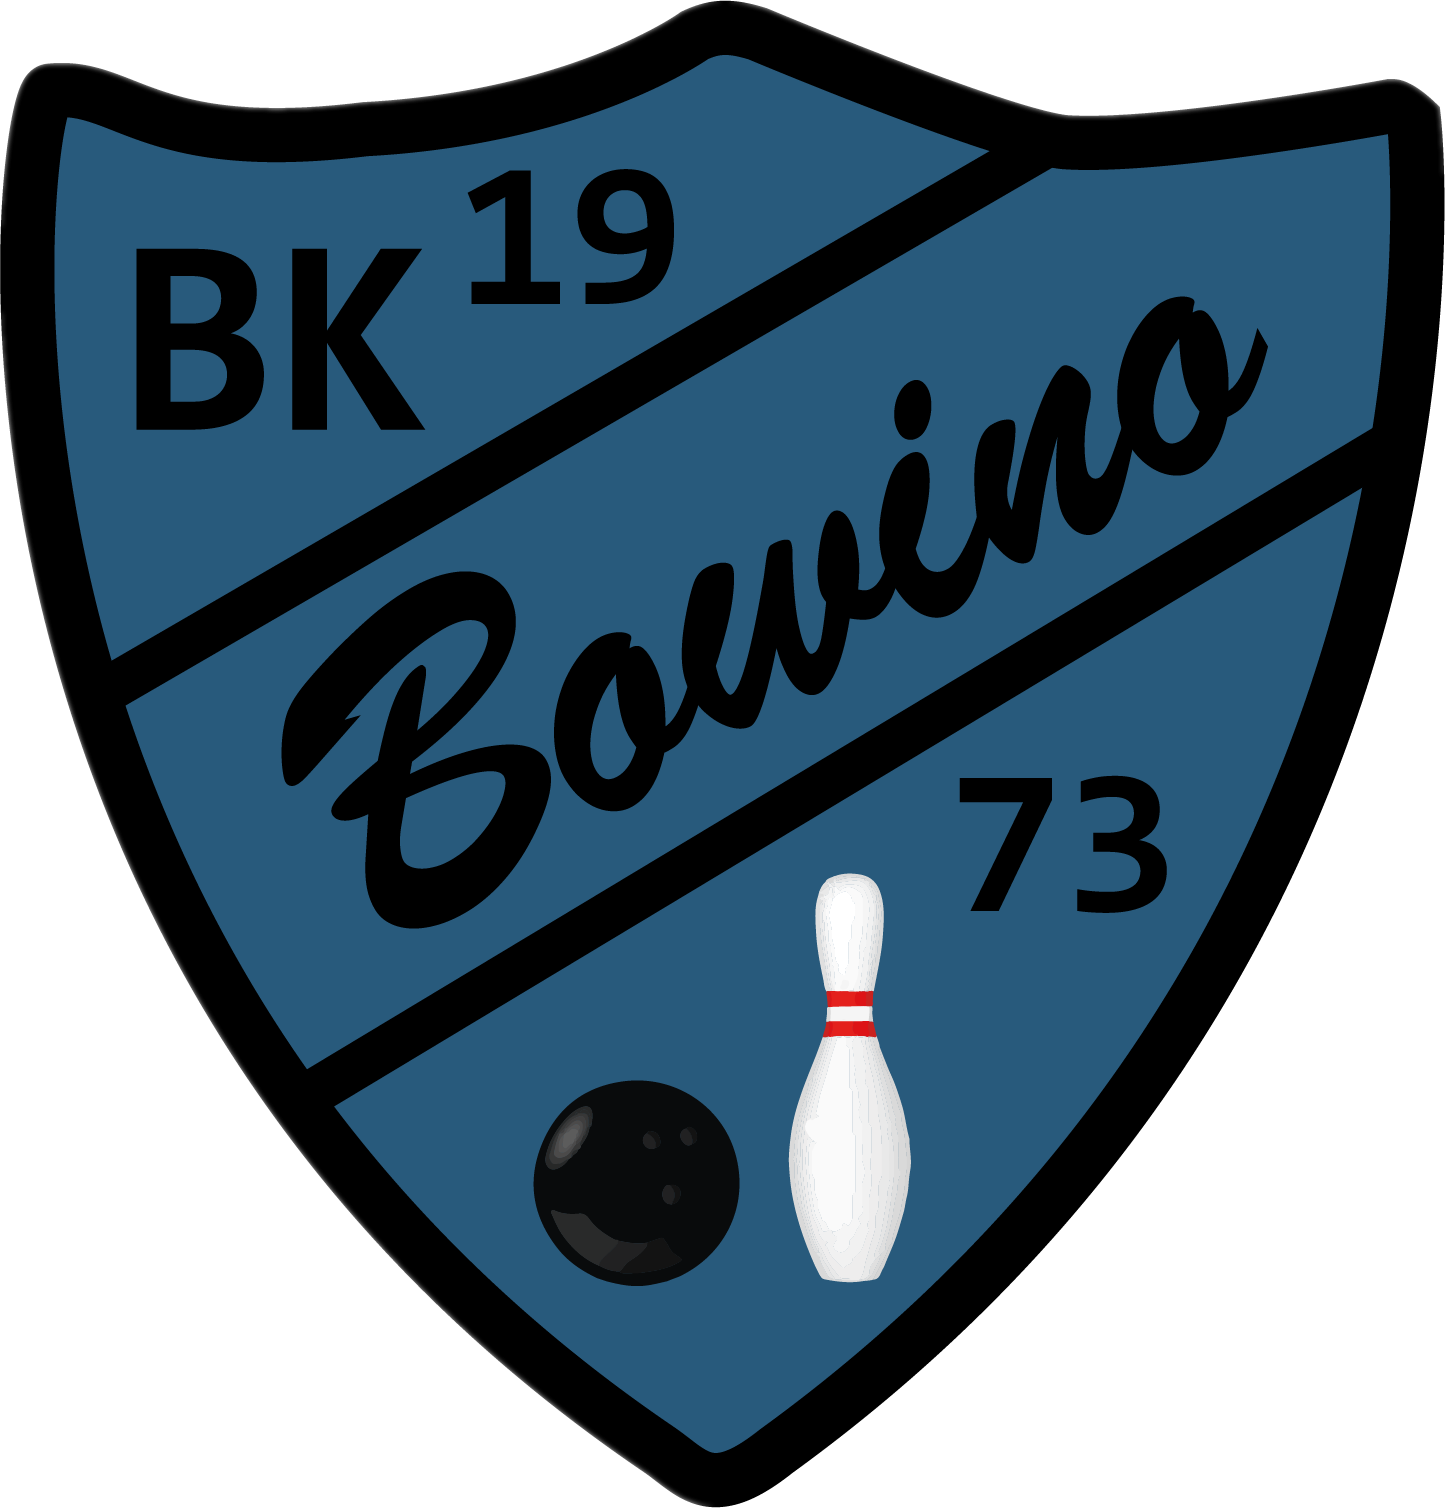 BK Bowino F